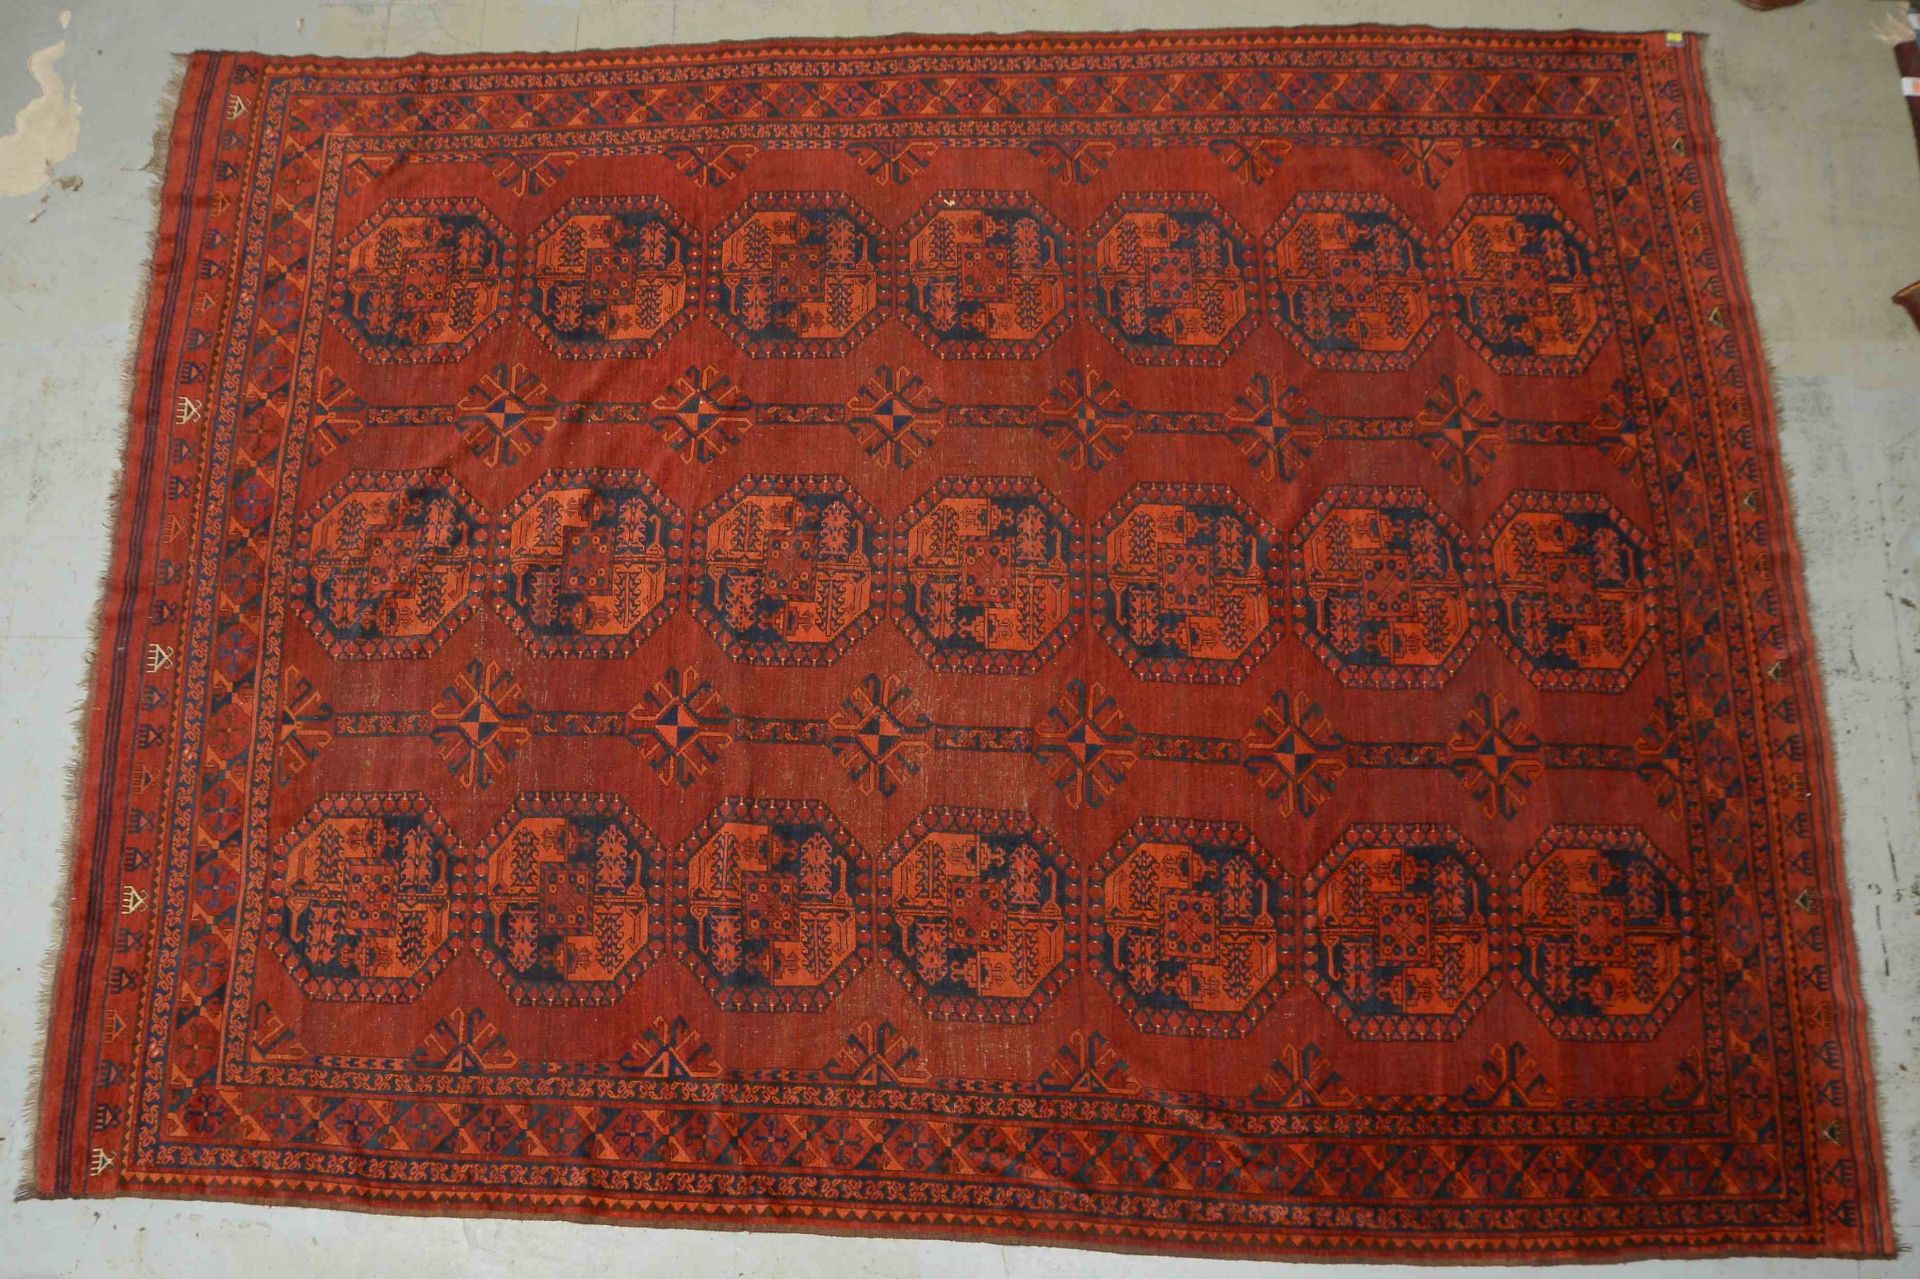 Afghanischer Bashir, antik, warme Farbgebung; Ma&e 400 x 295 cm